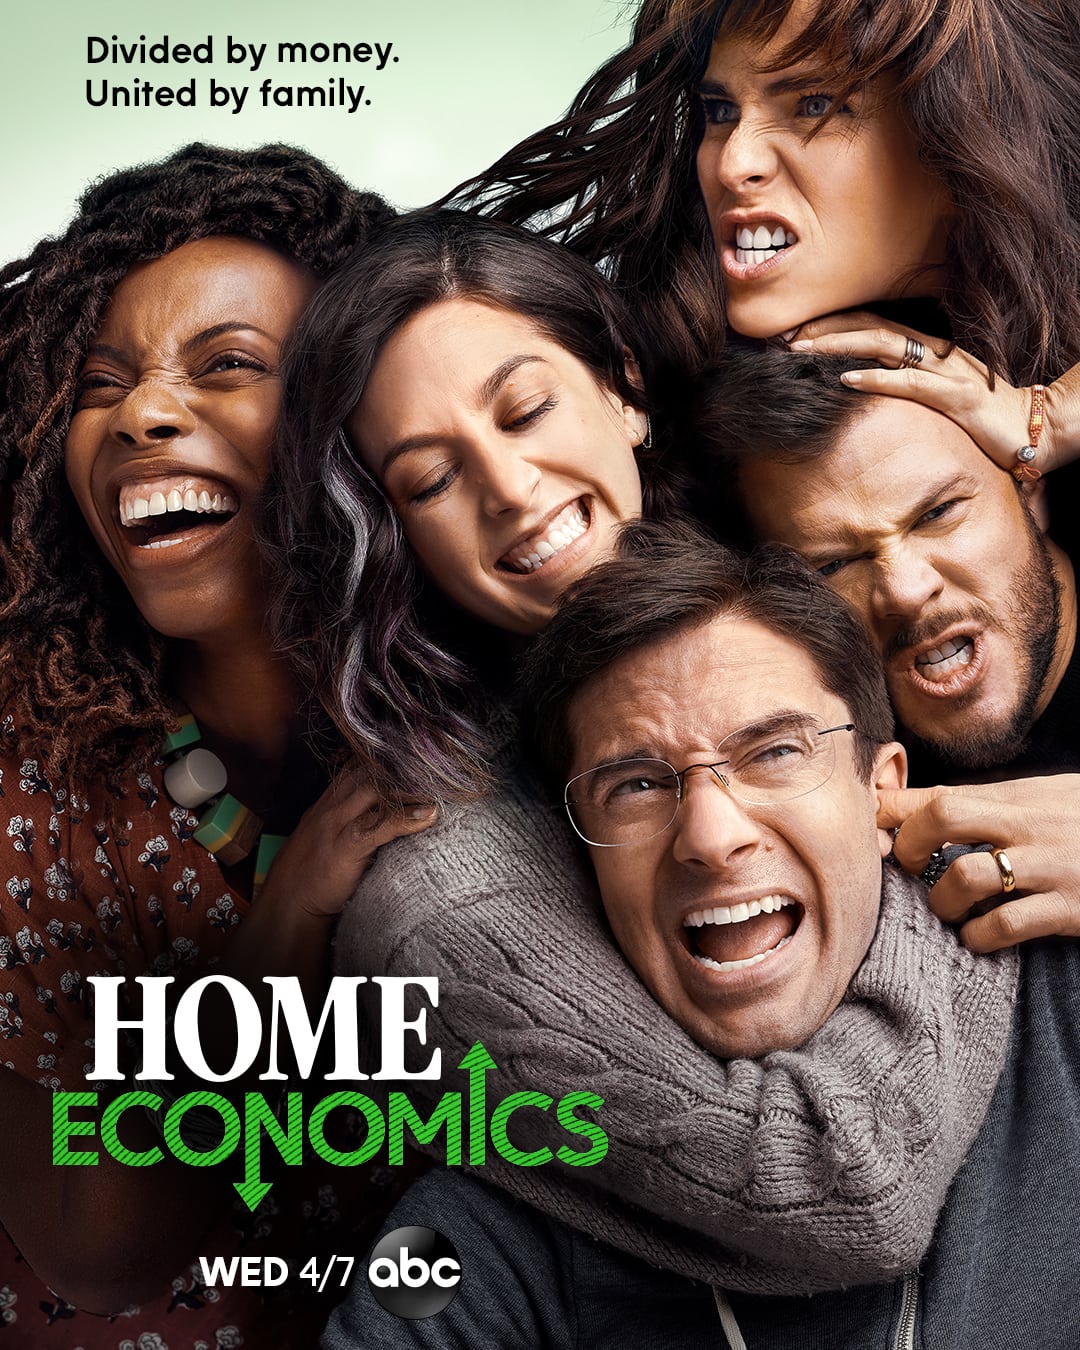 Home Economics Show Review